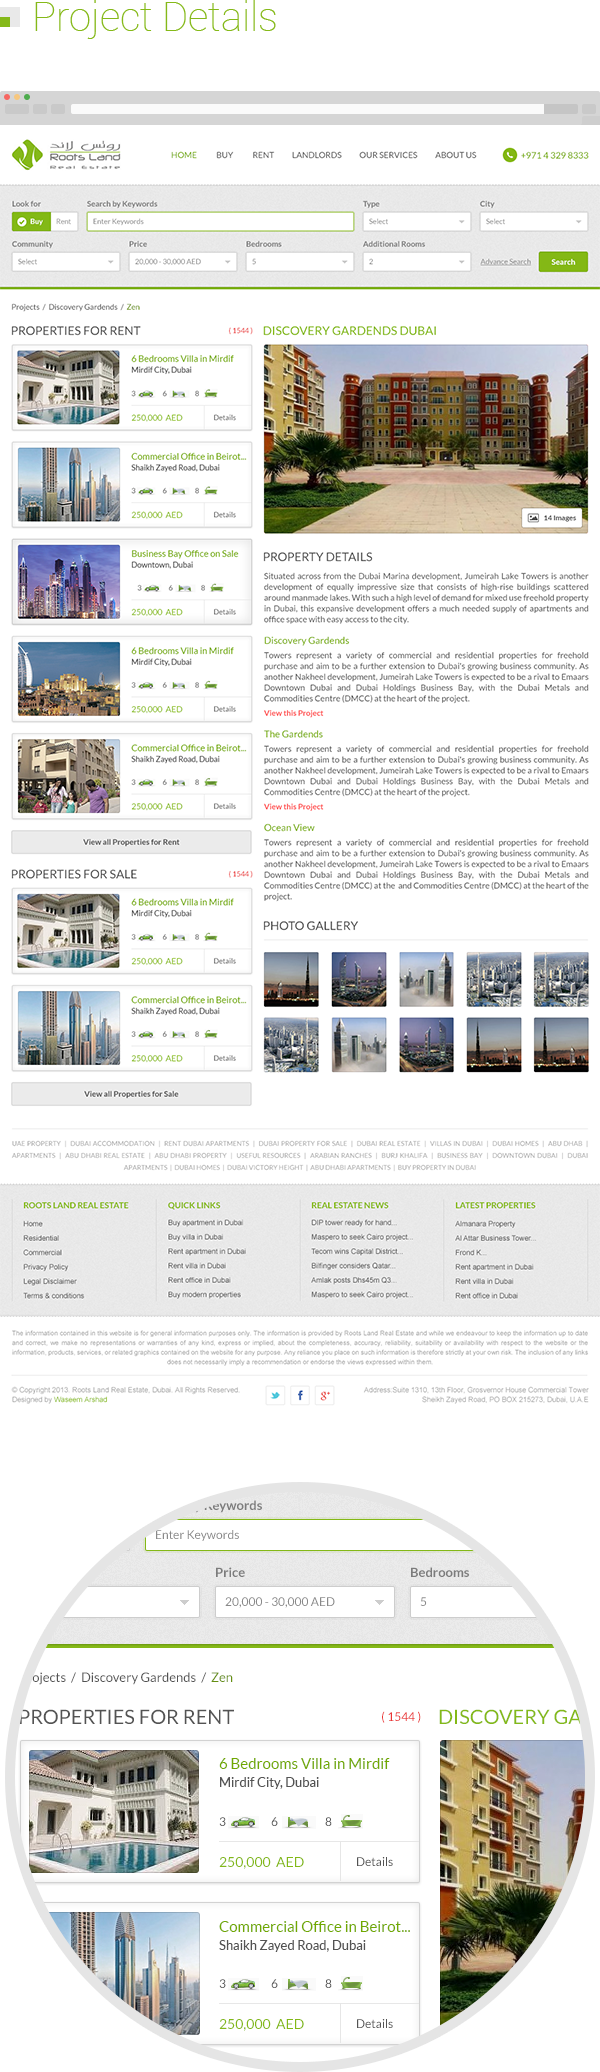 property perperties realestate Real Esate portal Website Dubai property management ui ux creative web portfolio auctions arabic Abu Dhabi broker